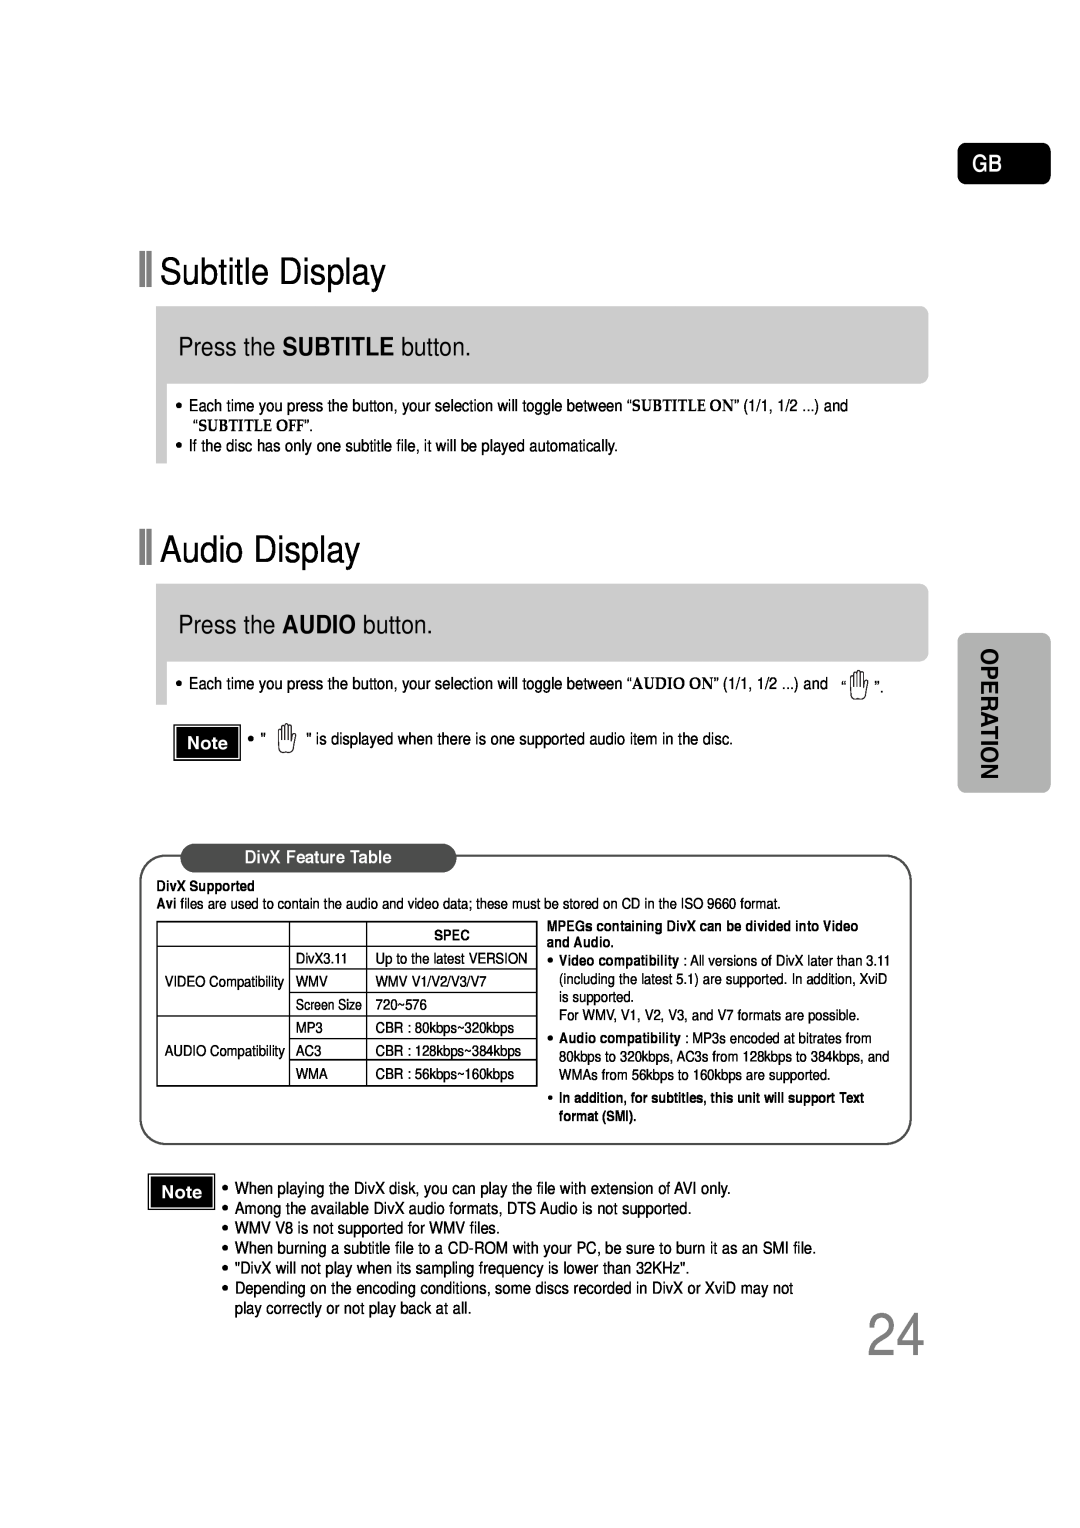 Samsung HT-P30 Subtitle Display, Audio Display, Press the SUBTITLE button, Press the AUDIO button, DivX Feature Table 